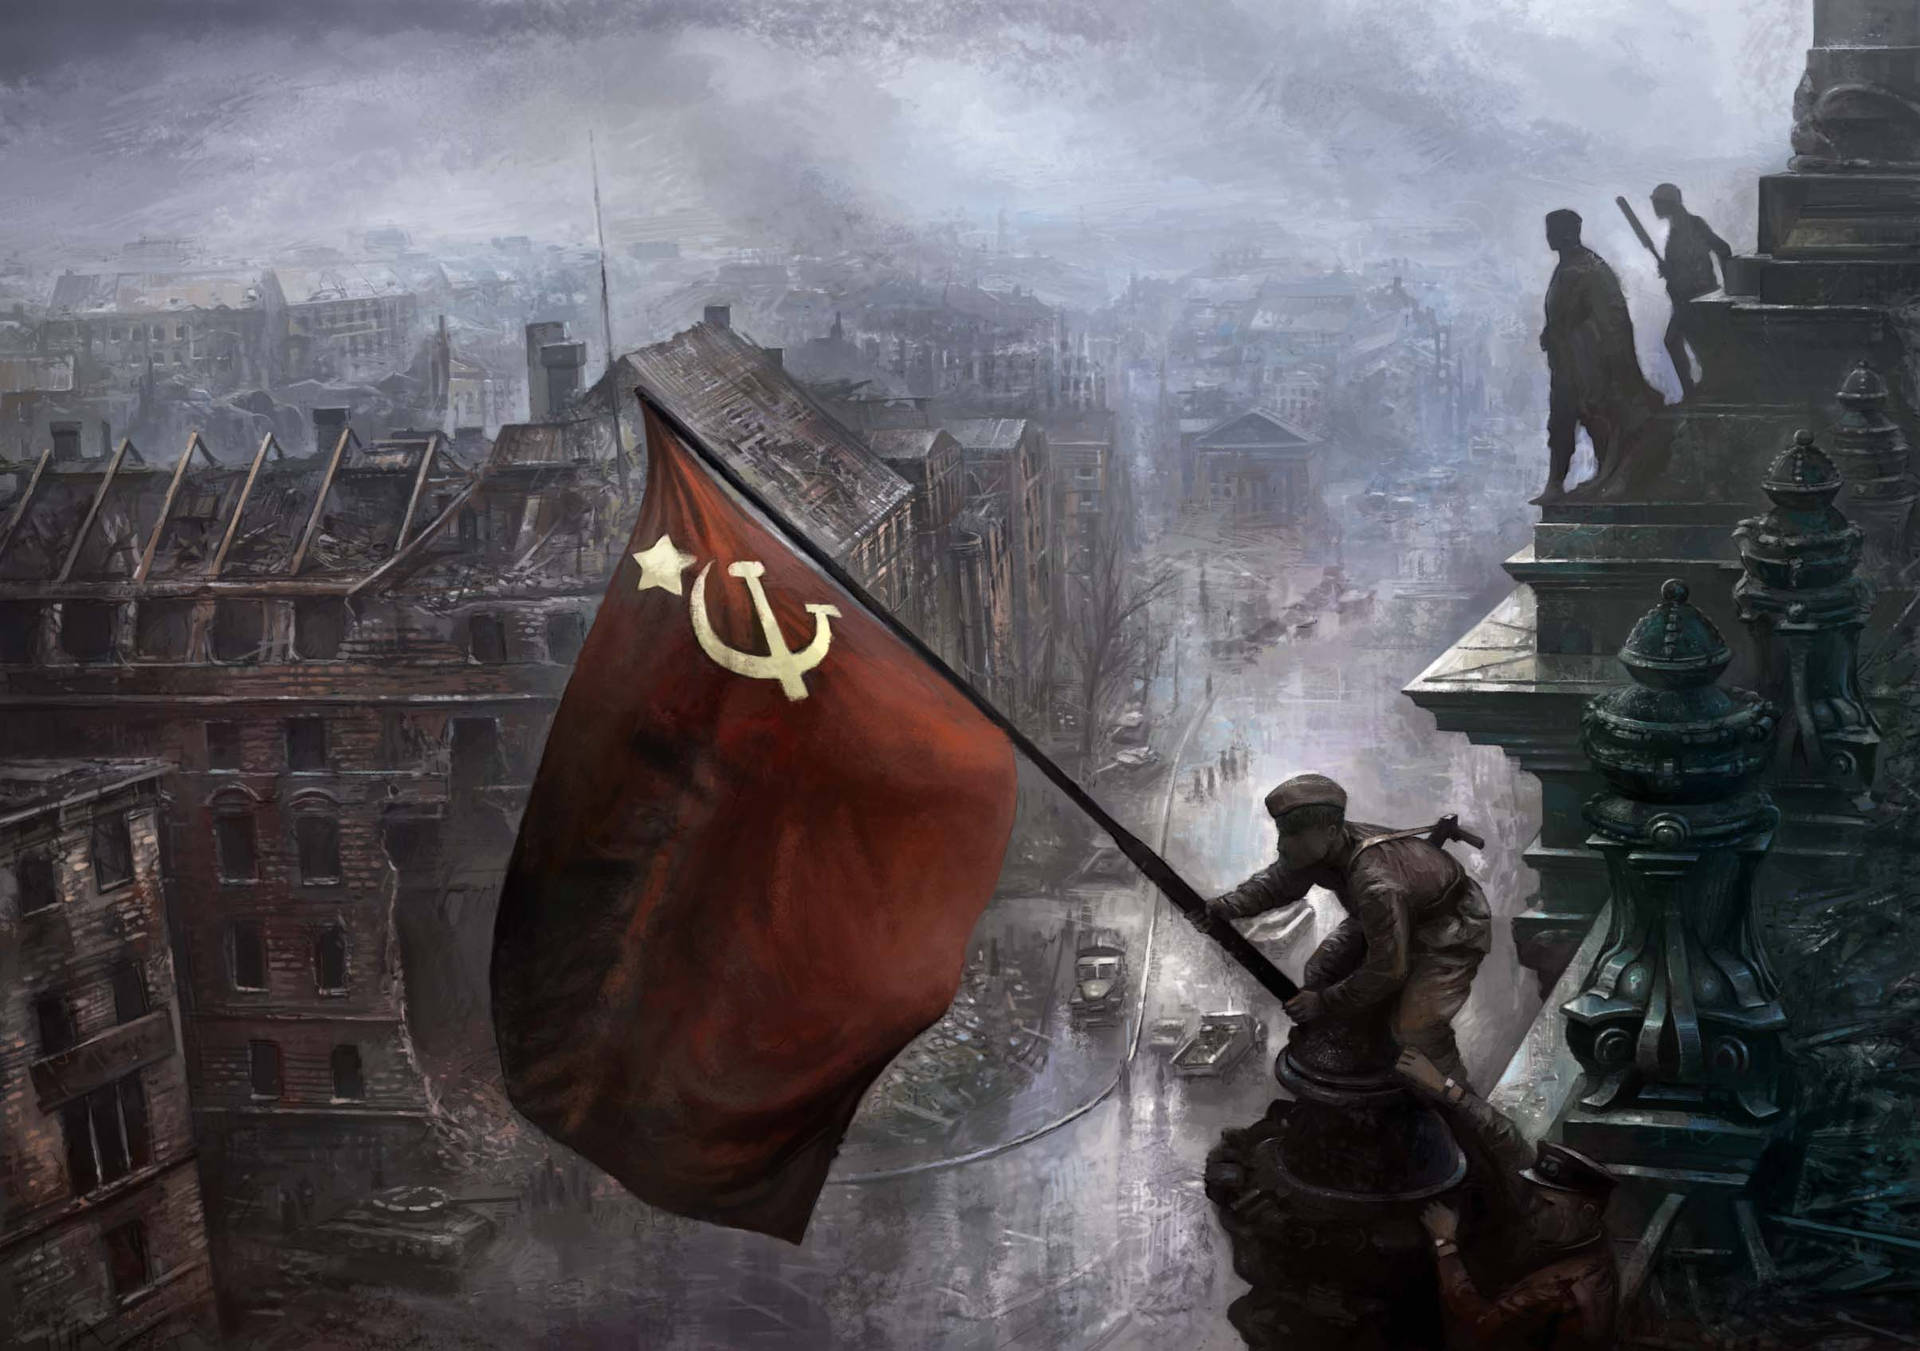 Soviet Flags Fly over War Zone Wallpaper